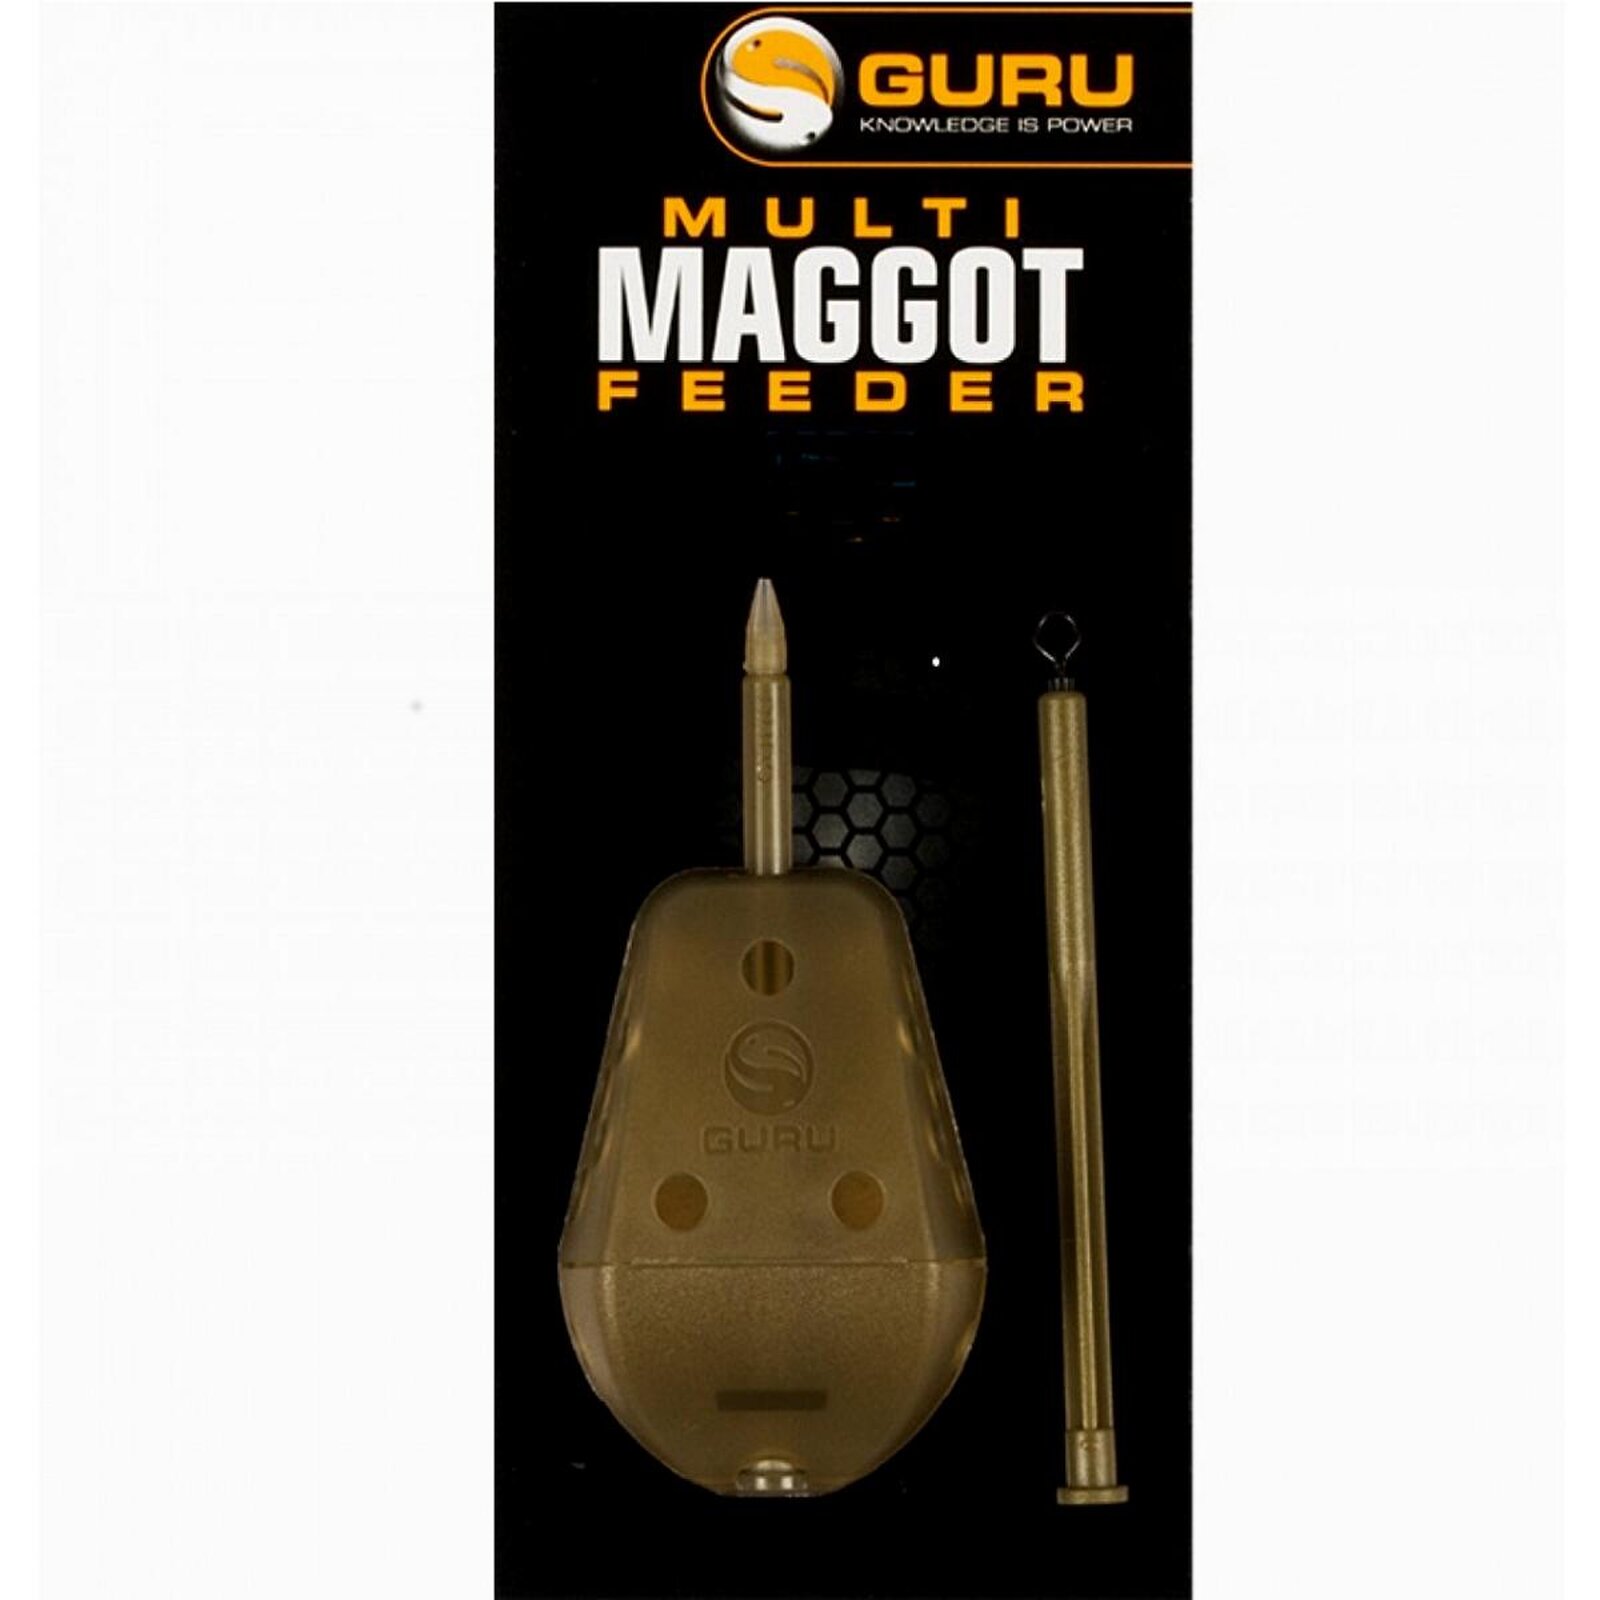 GURU Maggot Feeder small